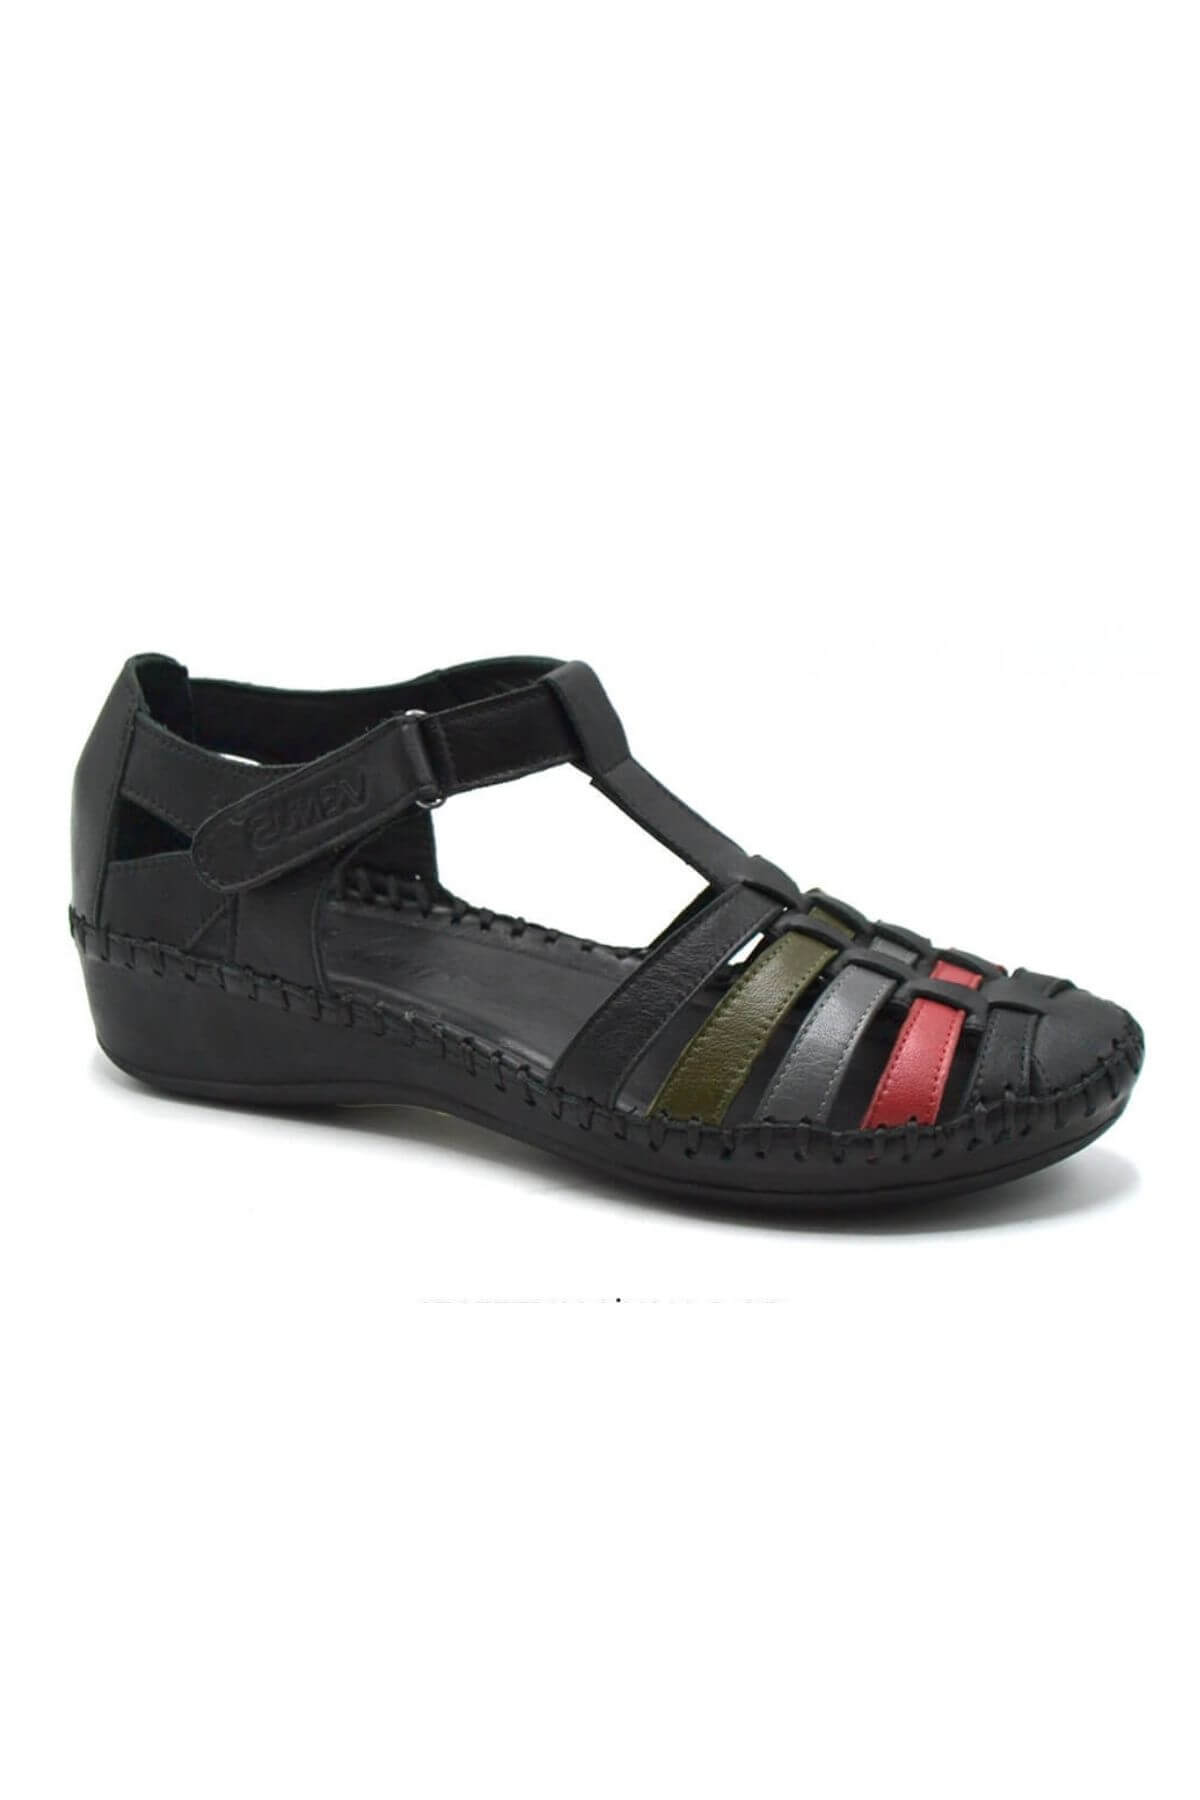 Kadın Comfort Deri Sandalet Siyah 23033319Y - Thumbnail